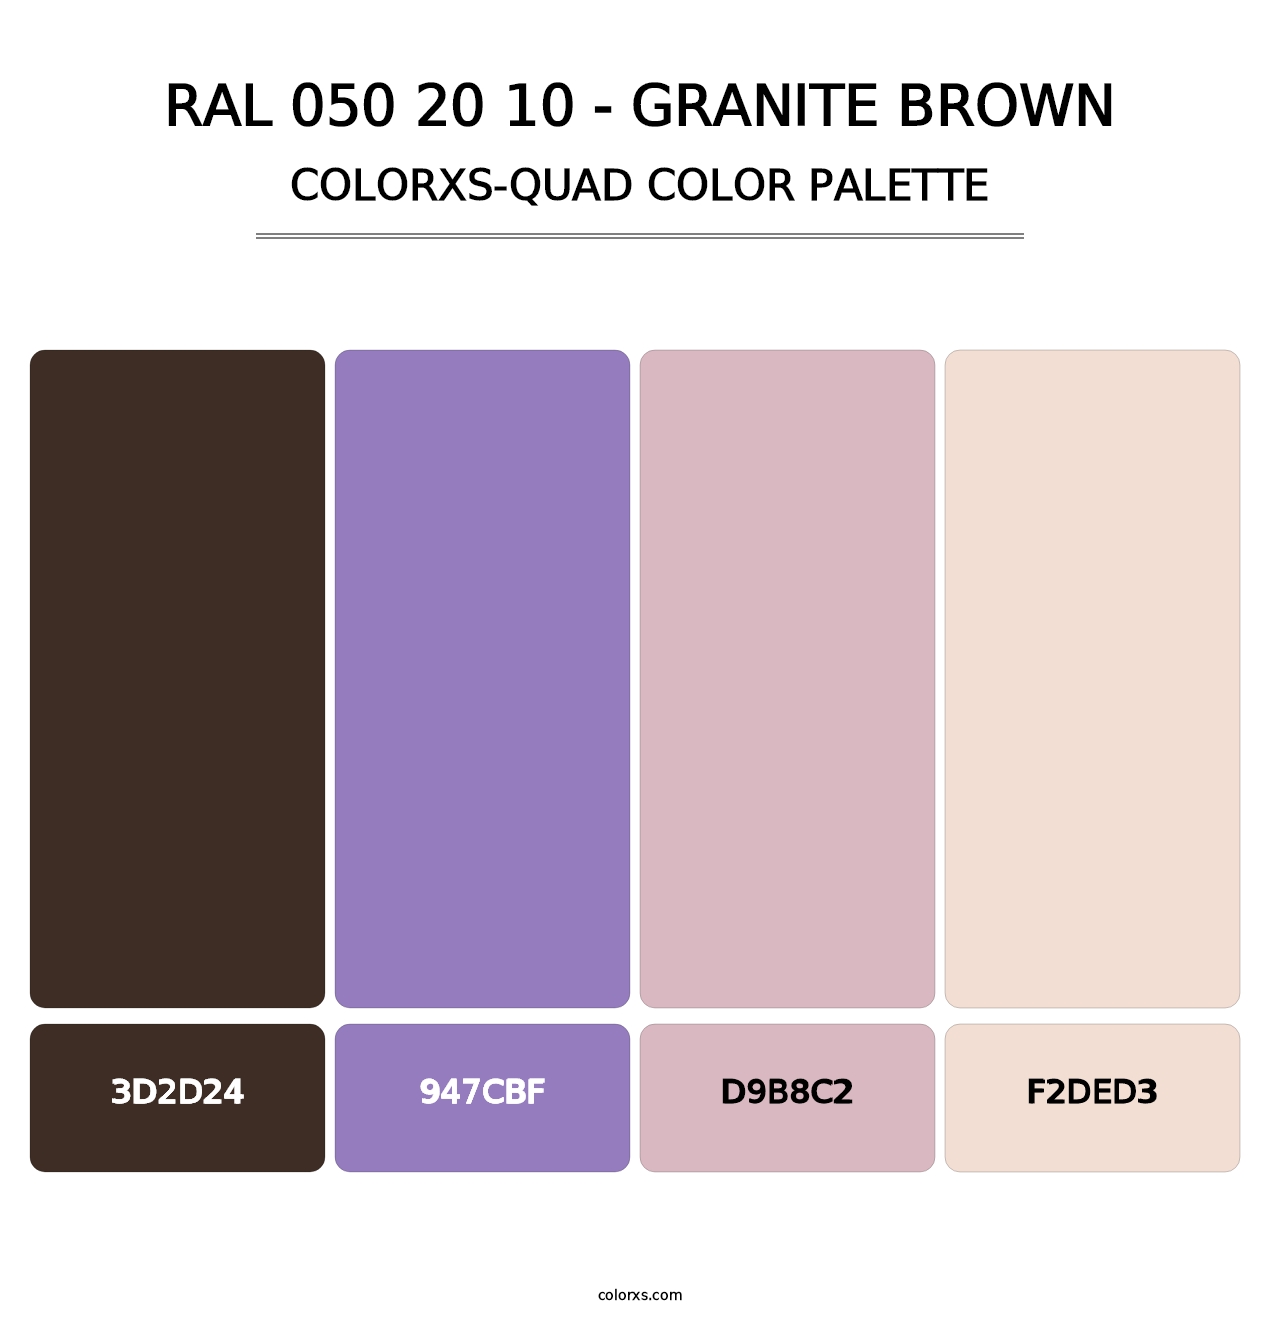 RAL 050 20 10 - Granite Brown - Colorxs Quad Palette